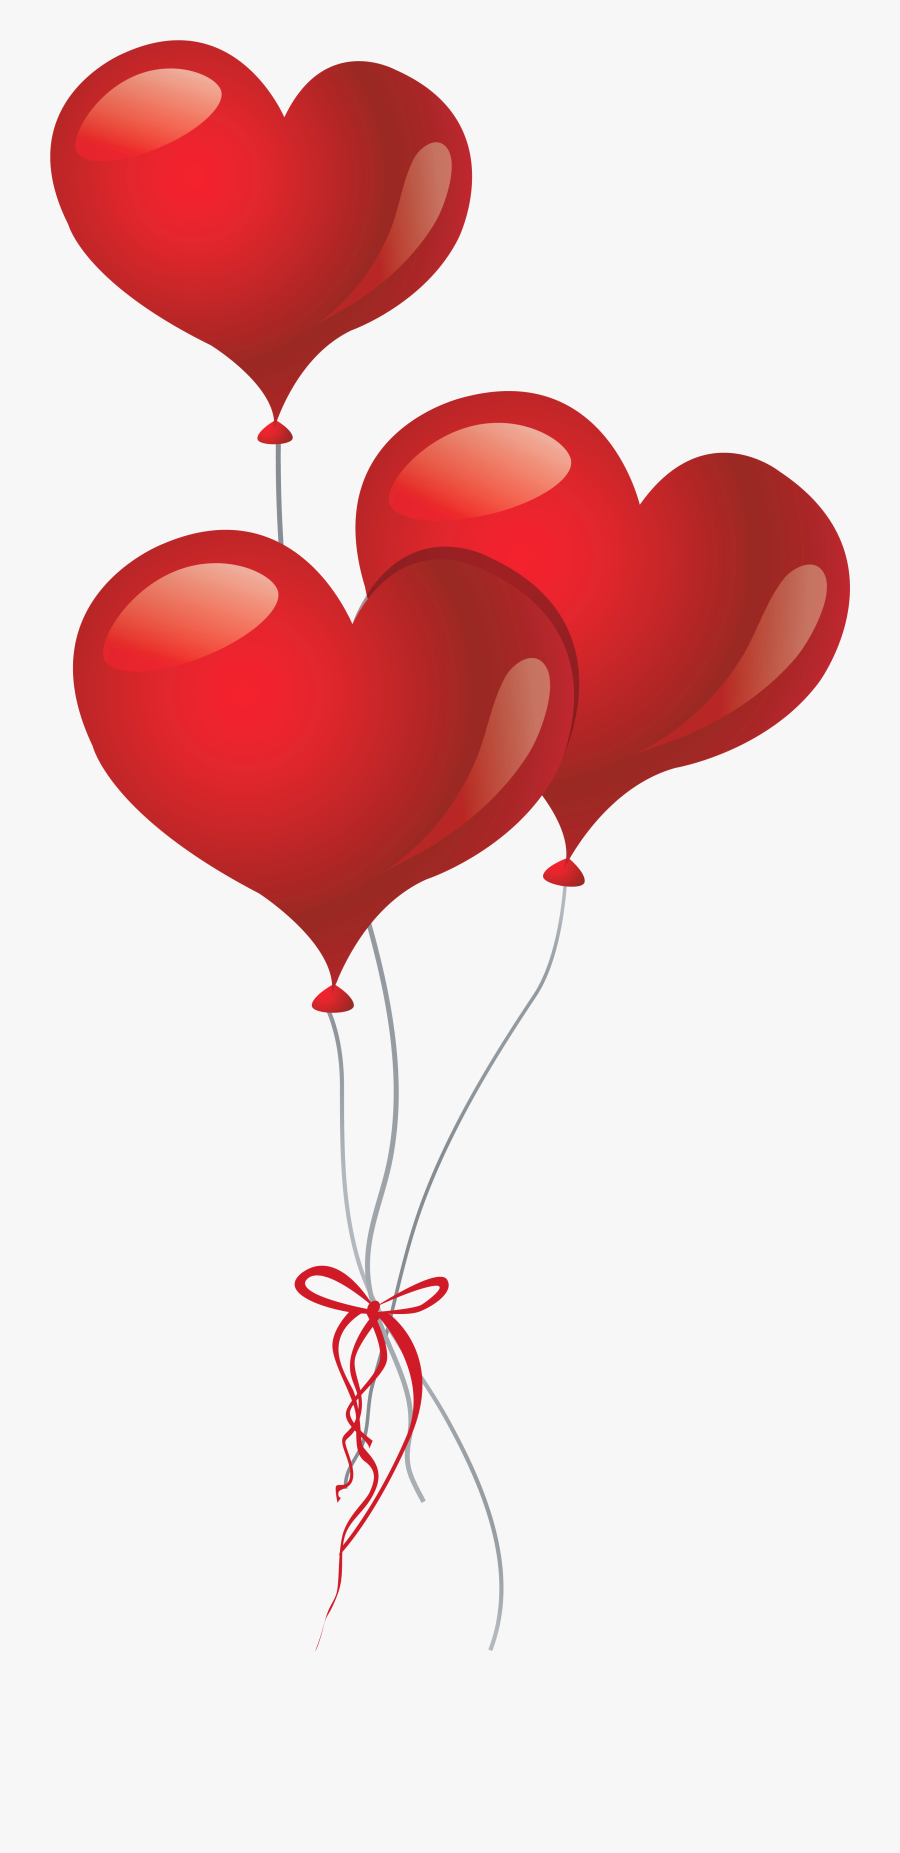 Heart Balloon Clipart - Heart Balloon Animated Gif, Transparent Clipart